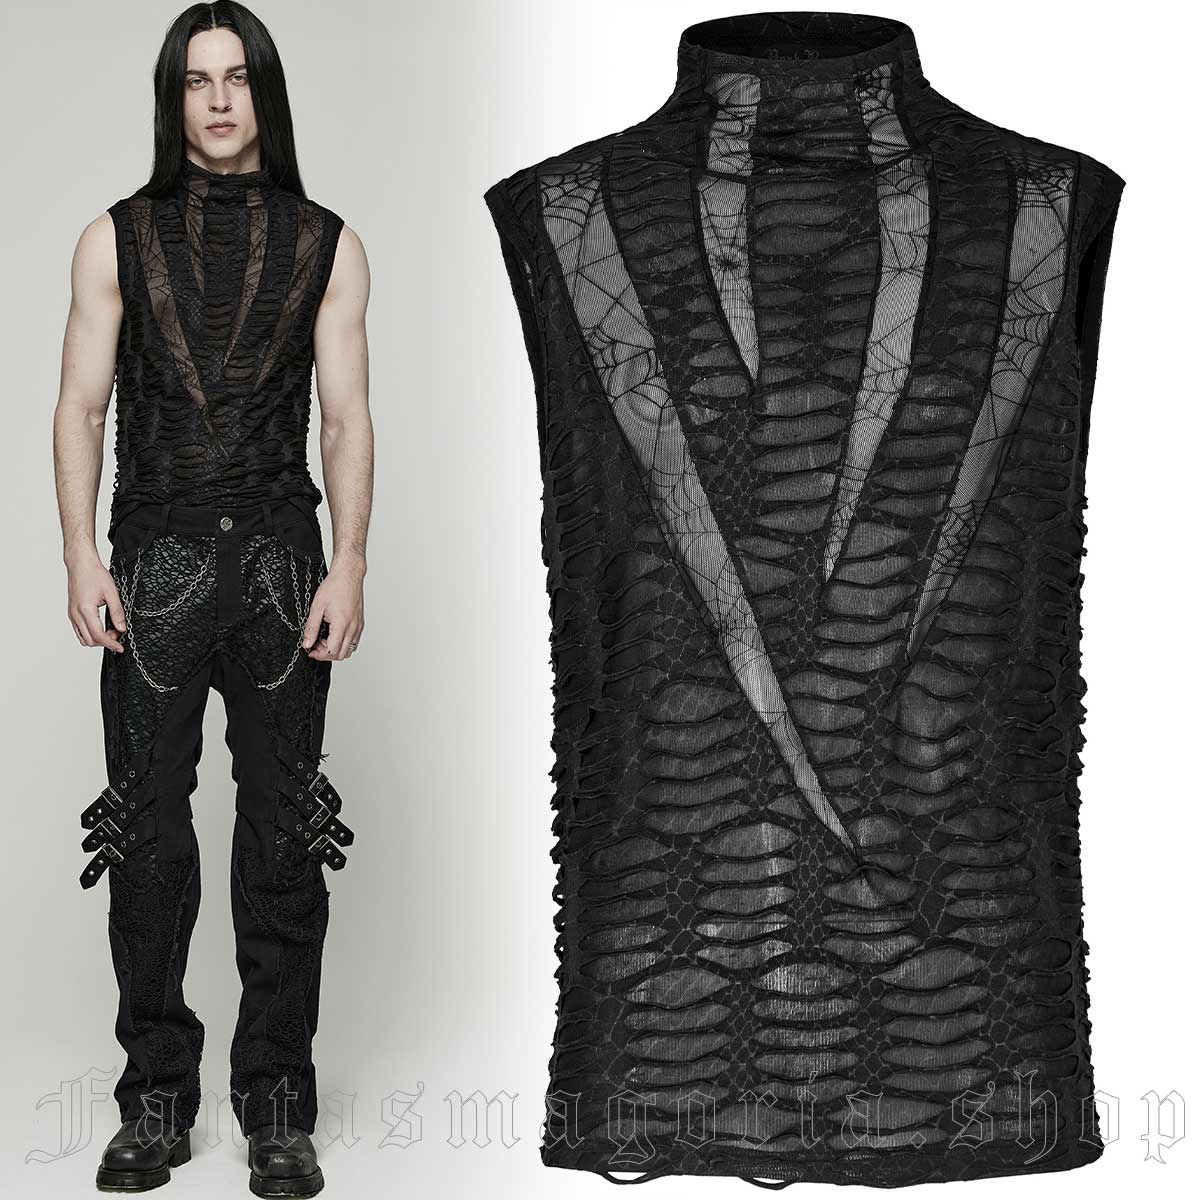 Men's Punk black distressed fabric spiderweb pattern mesh accent sleeveless high neck top. - Punk Rave - WT-777/BK